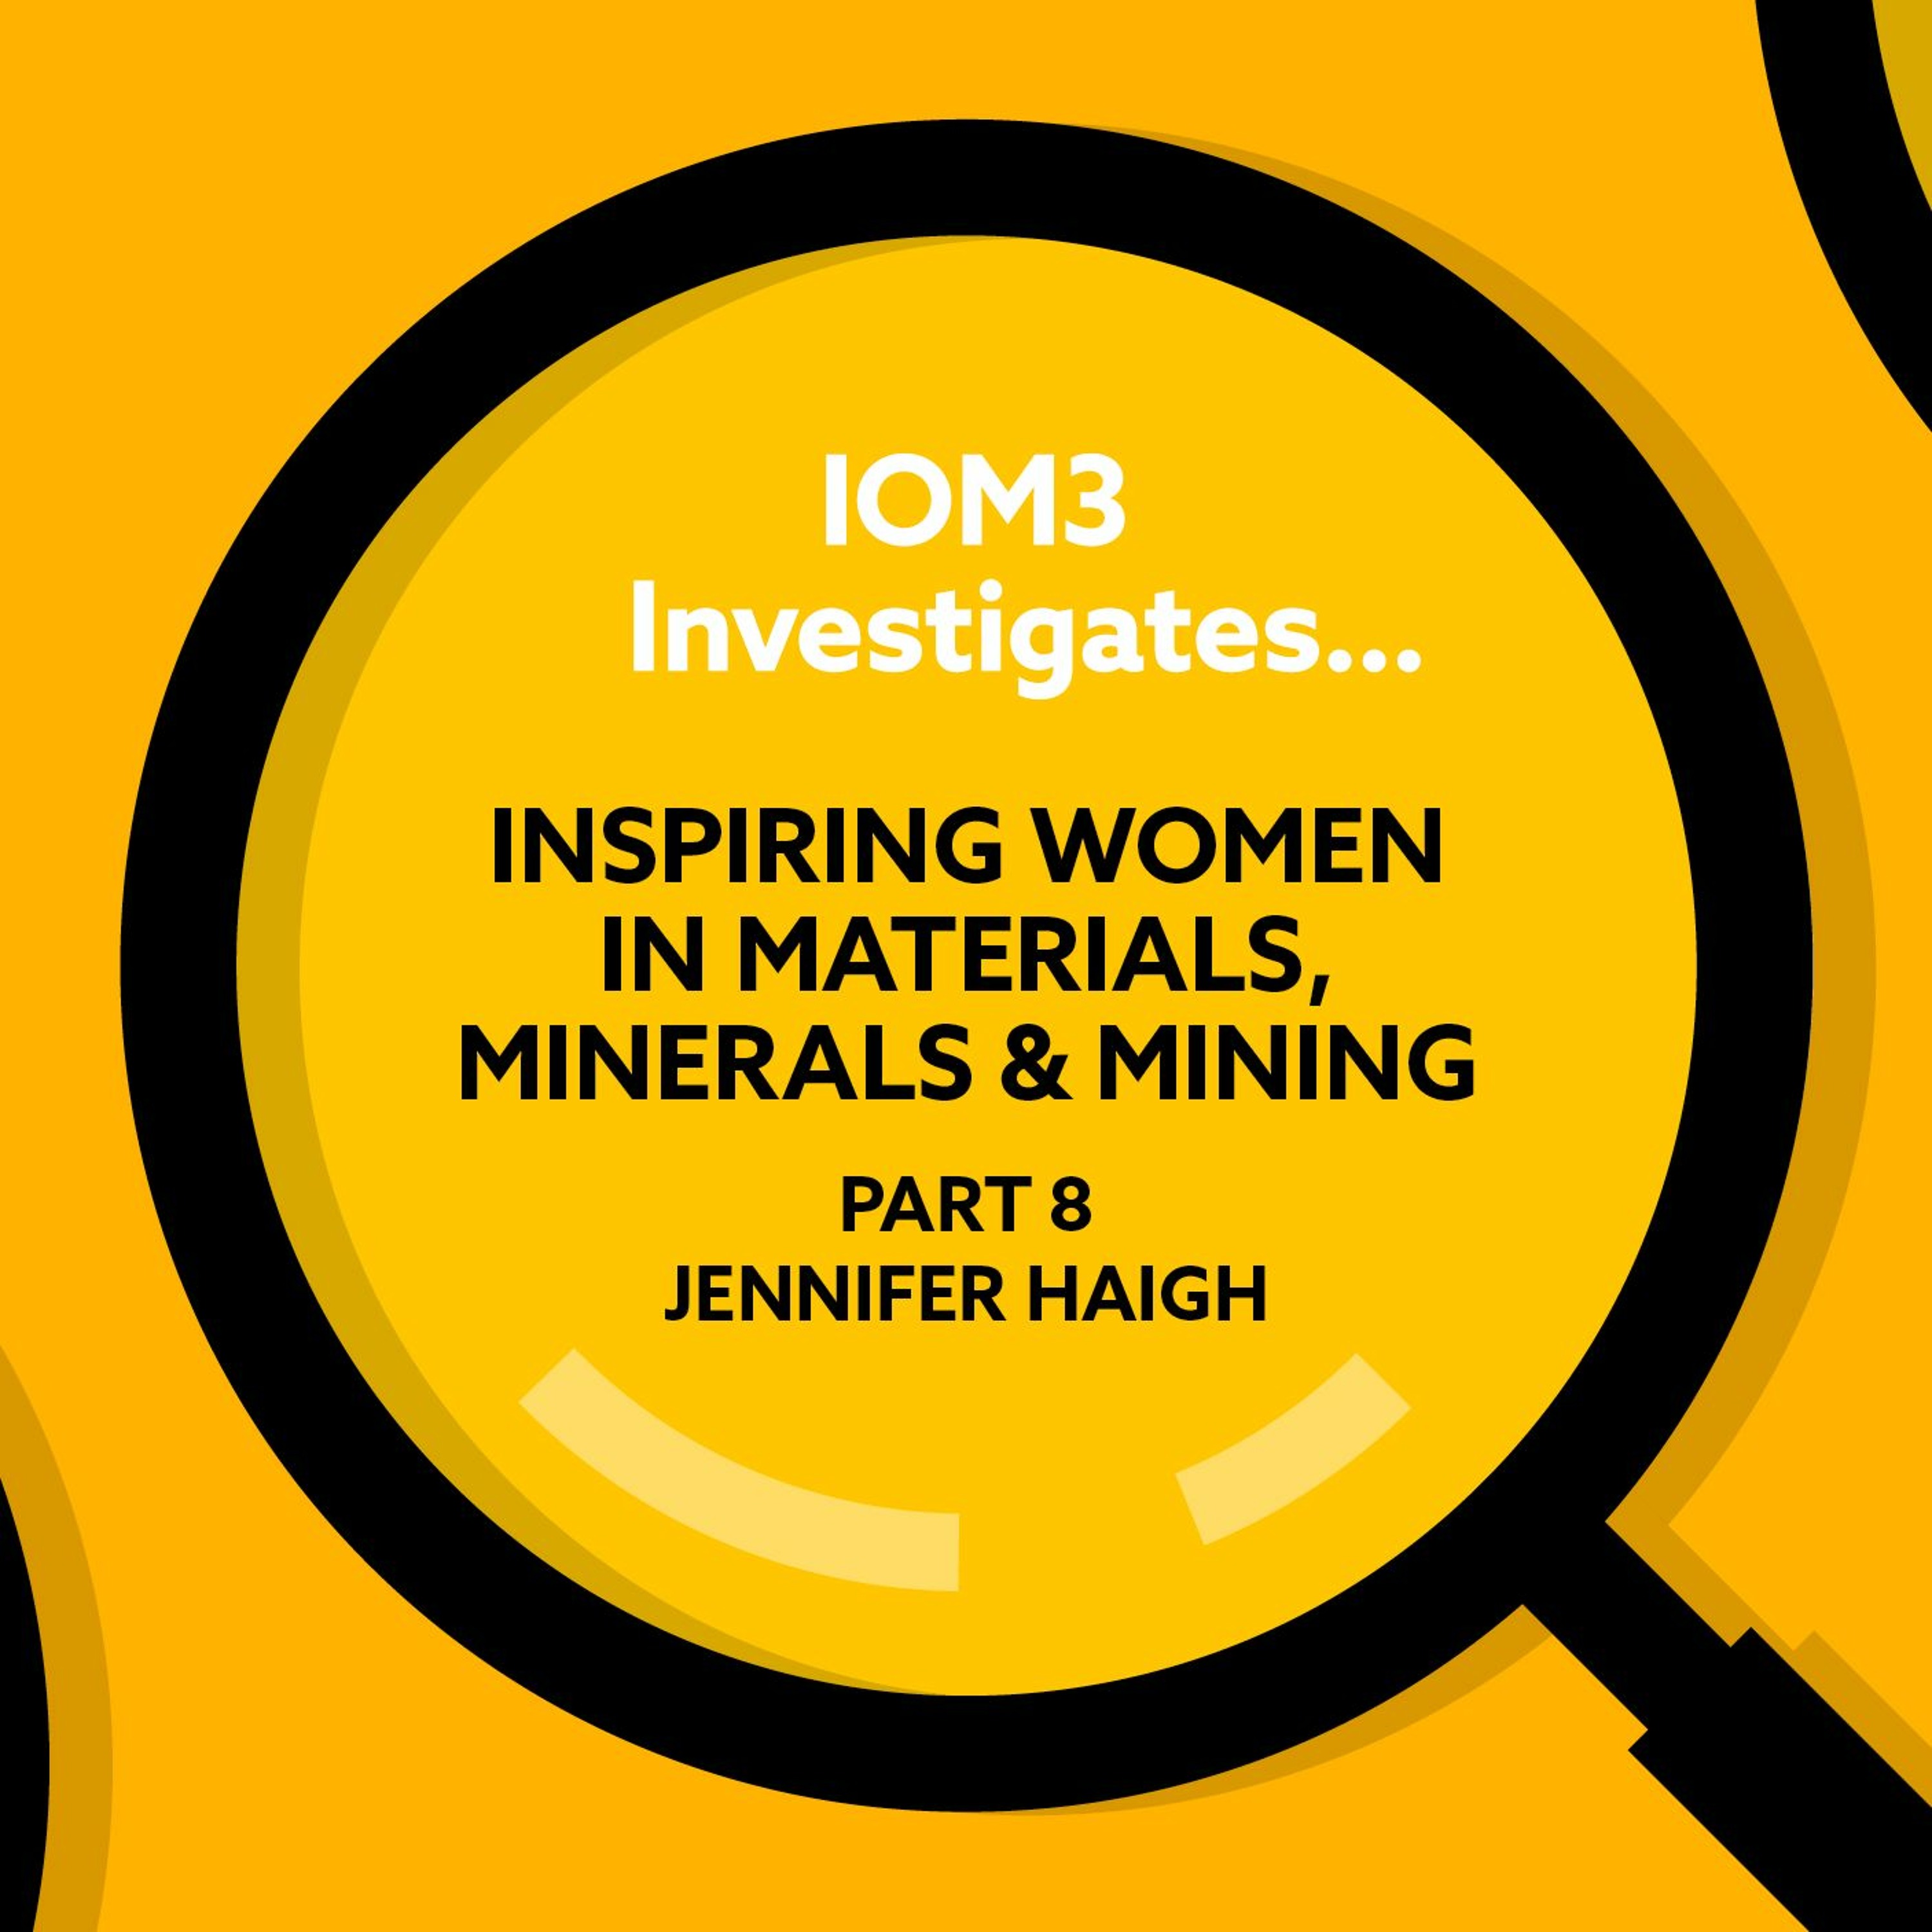 IOM3 Investigates... Inspiring Women in Materials, Minerals & Mining: Jennifer Haigh